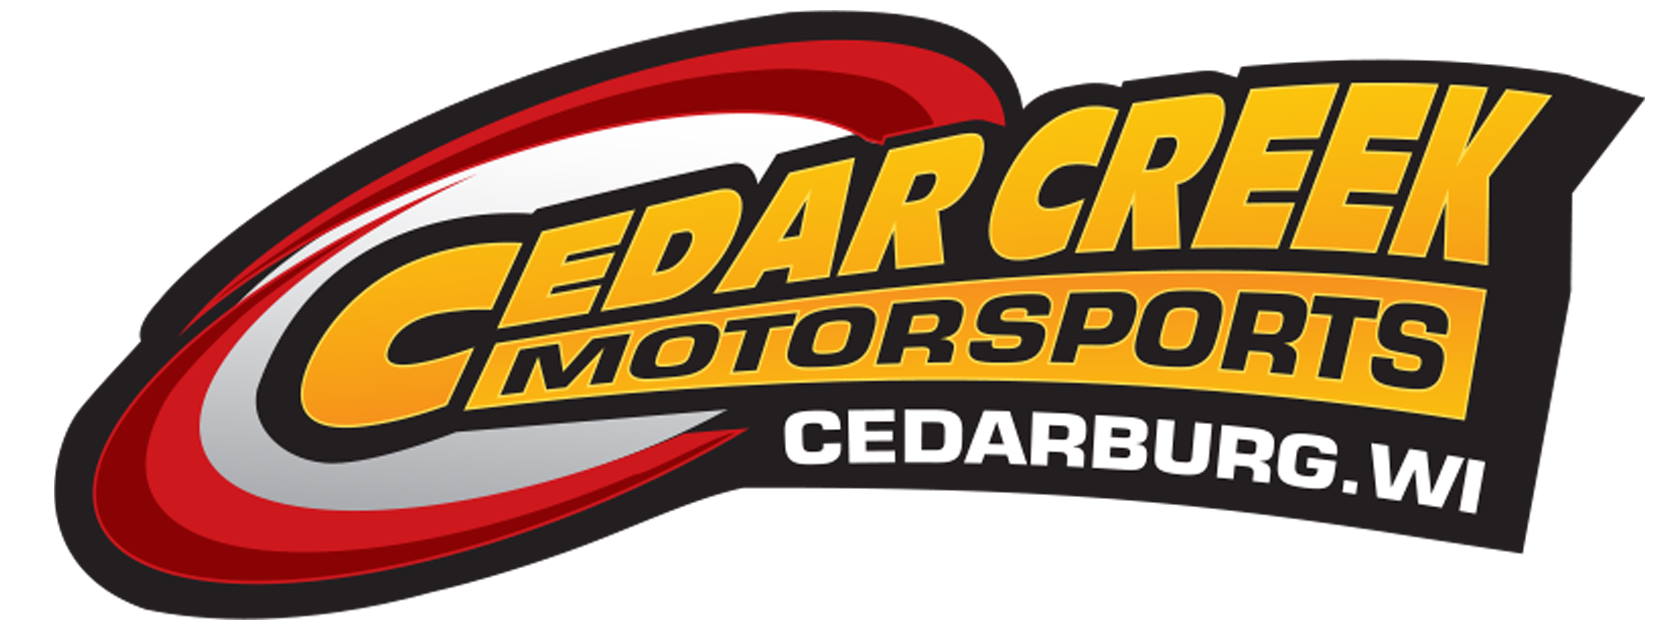 Cedar Creek Motorsports Logo